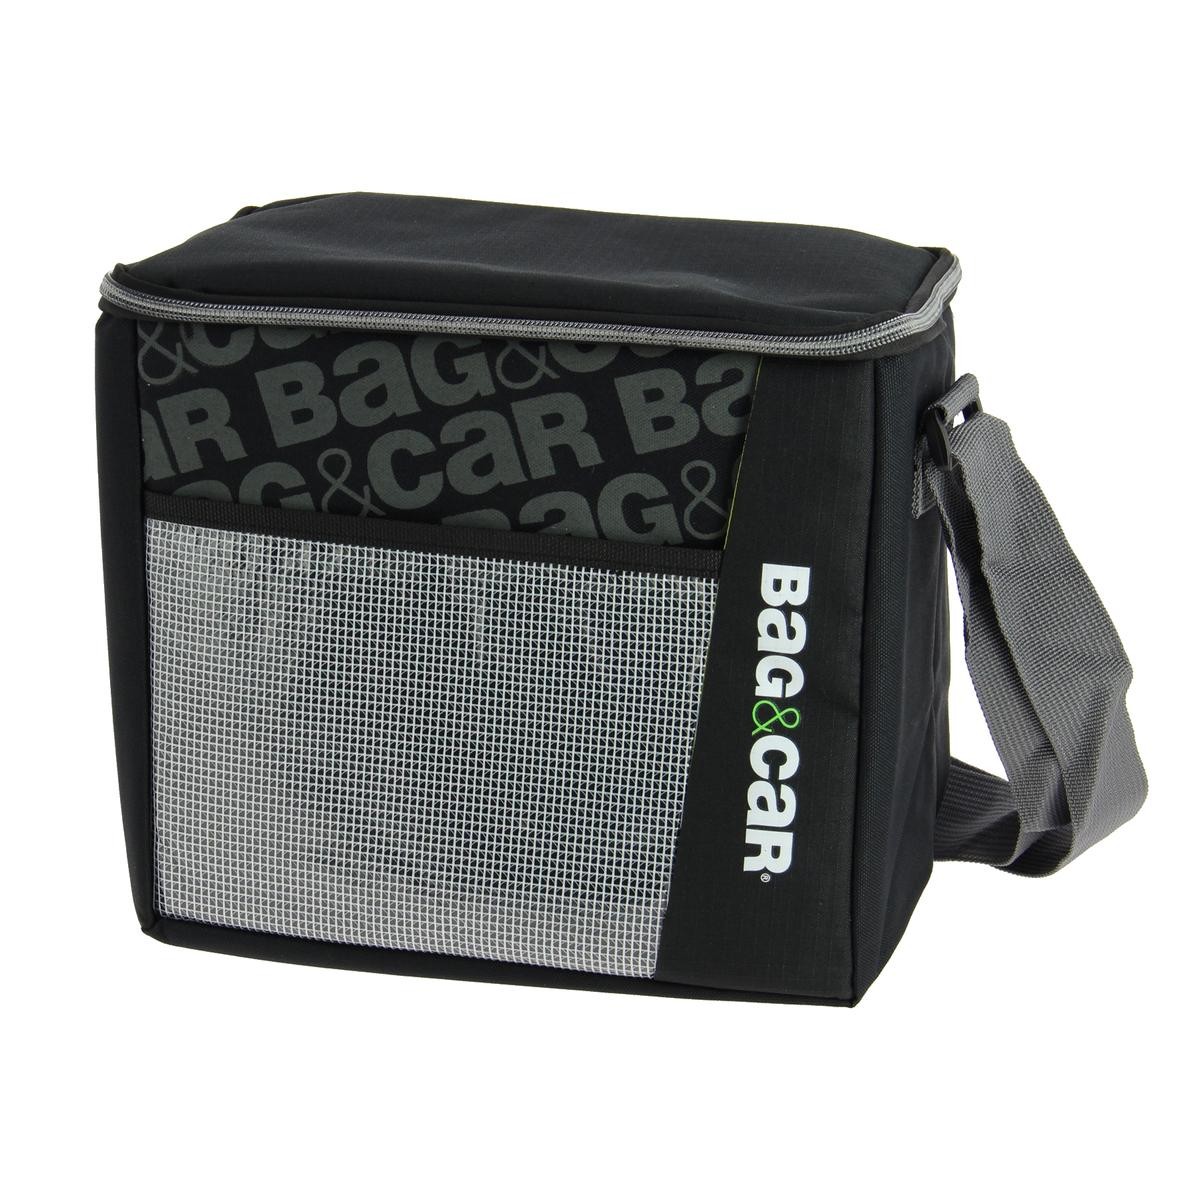 BAG&CAR 168002 Cooler bag Height: 280mm, Depth: 240mm, Width: 160mm